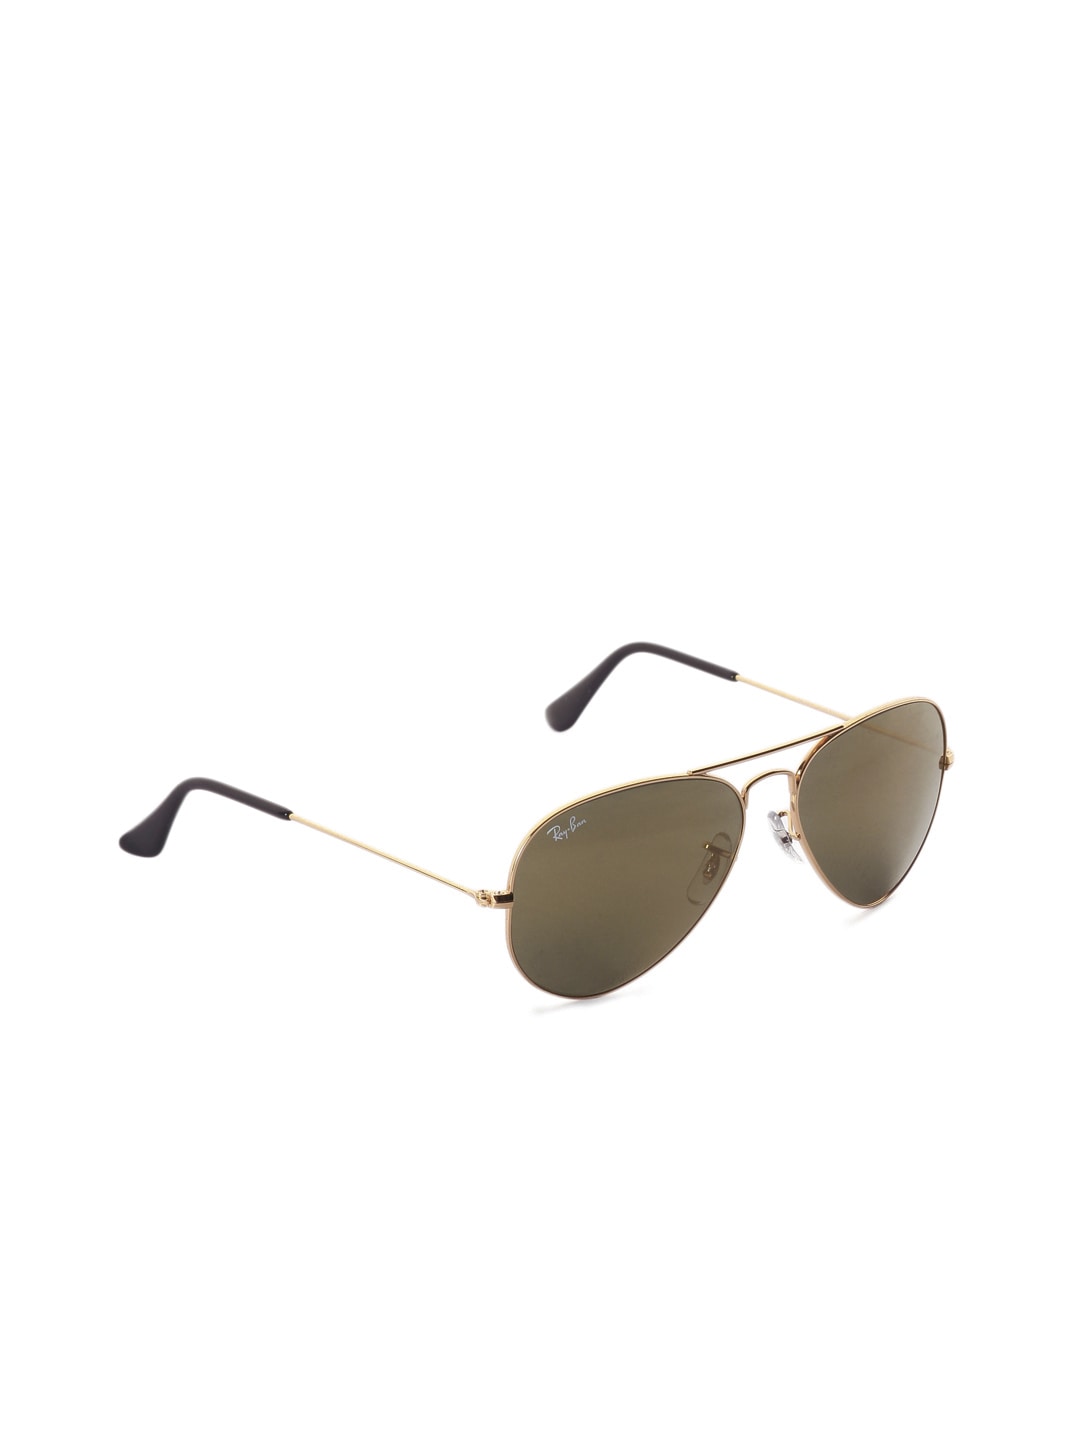 Ray-Ban Men Aviator Gold Sunglasses